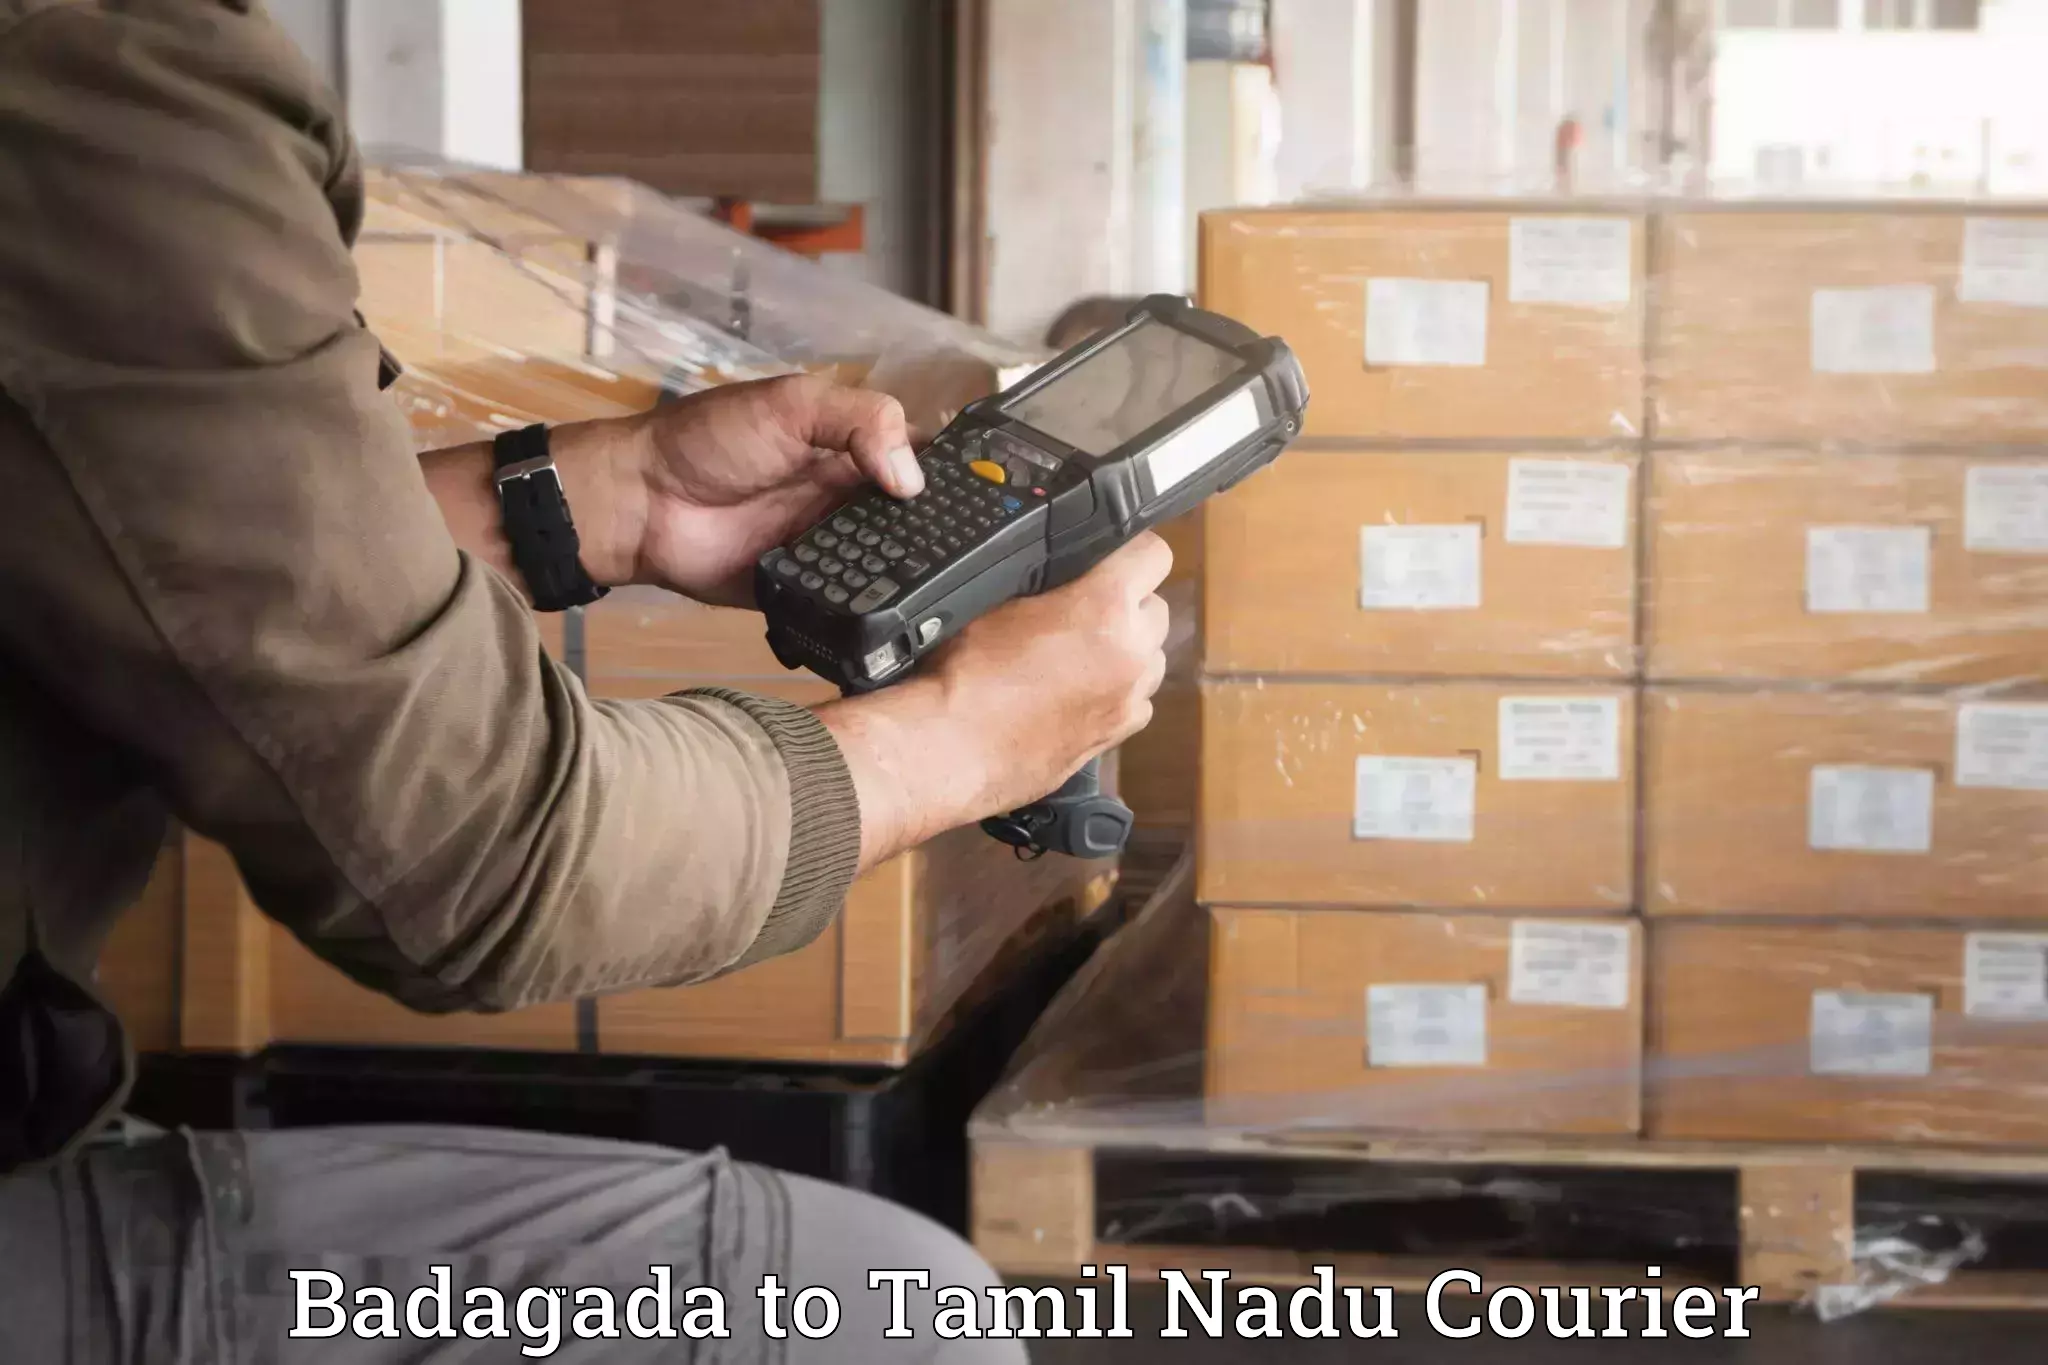 Professional moving company Badagada to Tamil Nadu